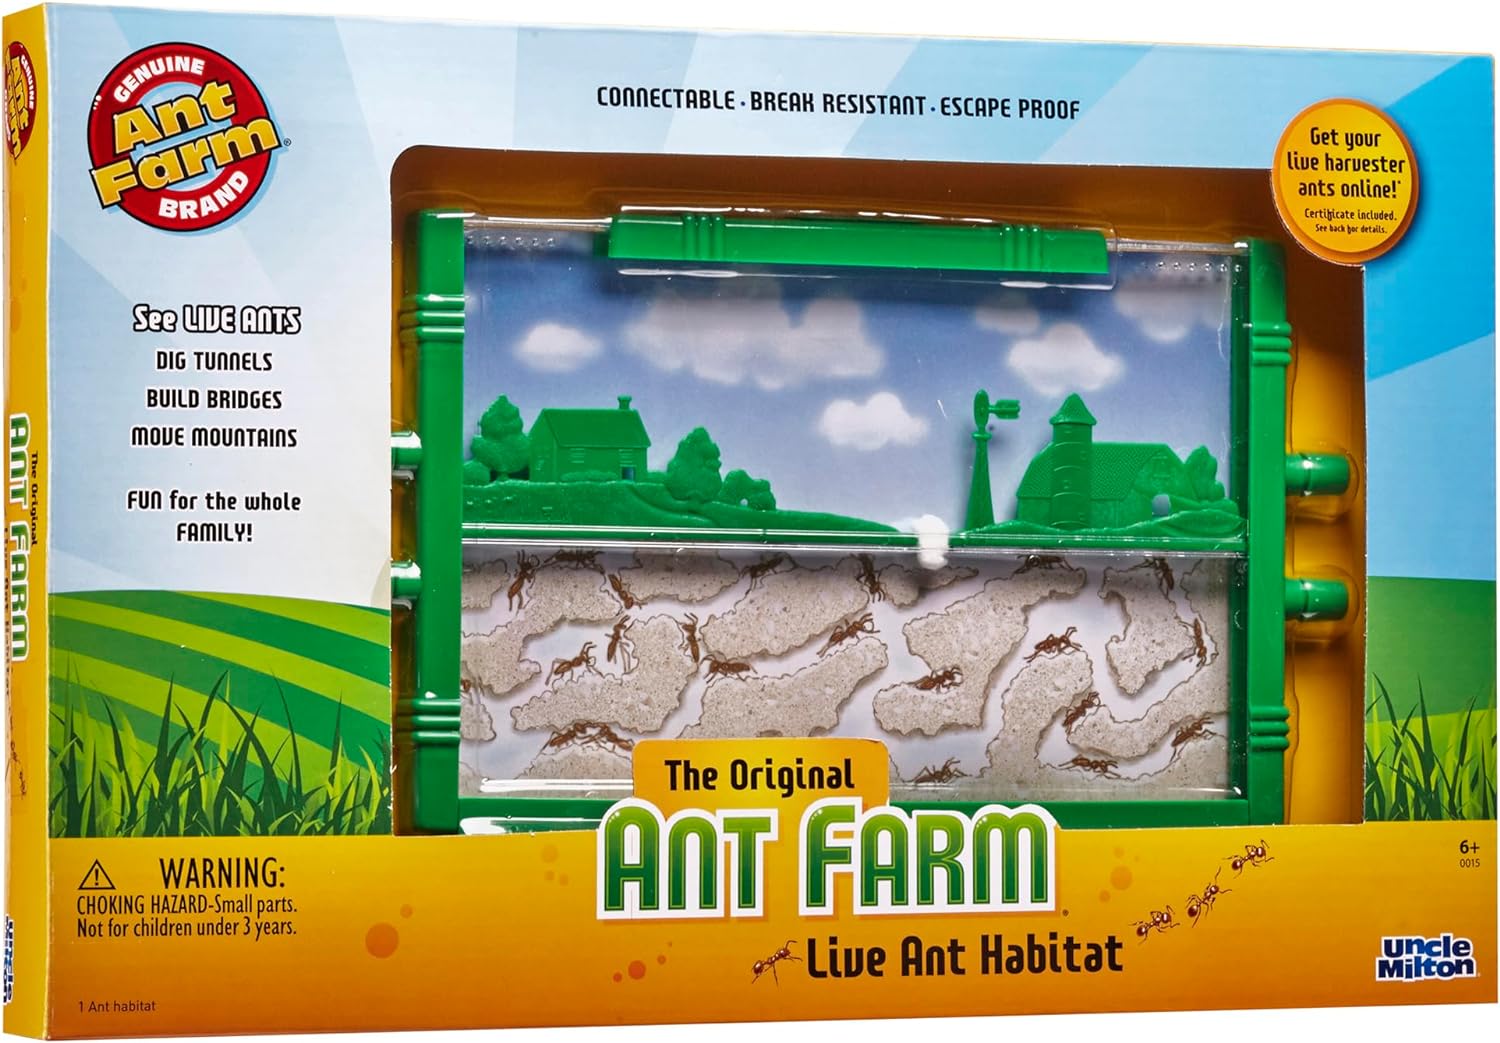 The Original Ant Farm